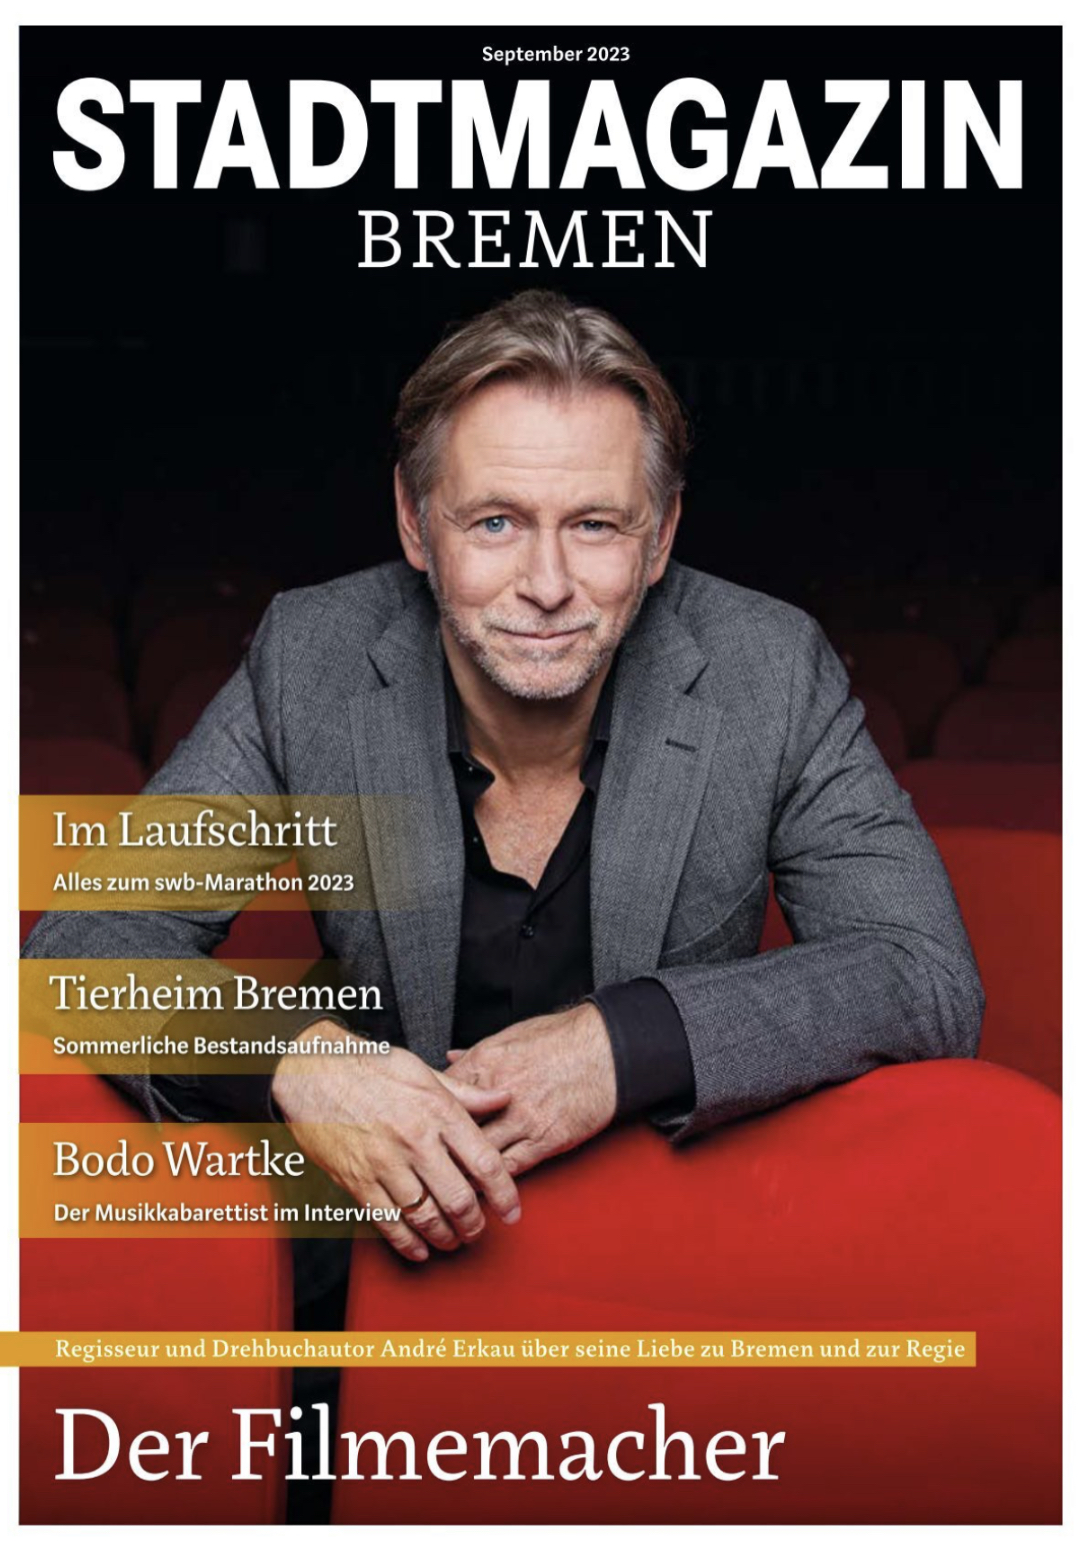 INTERVIEW: André Erkau im Stadtmagazin Bremen